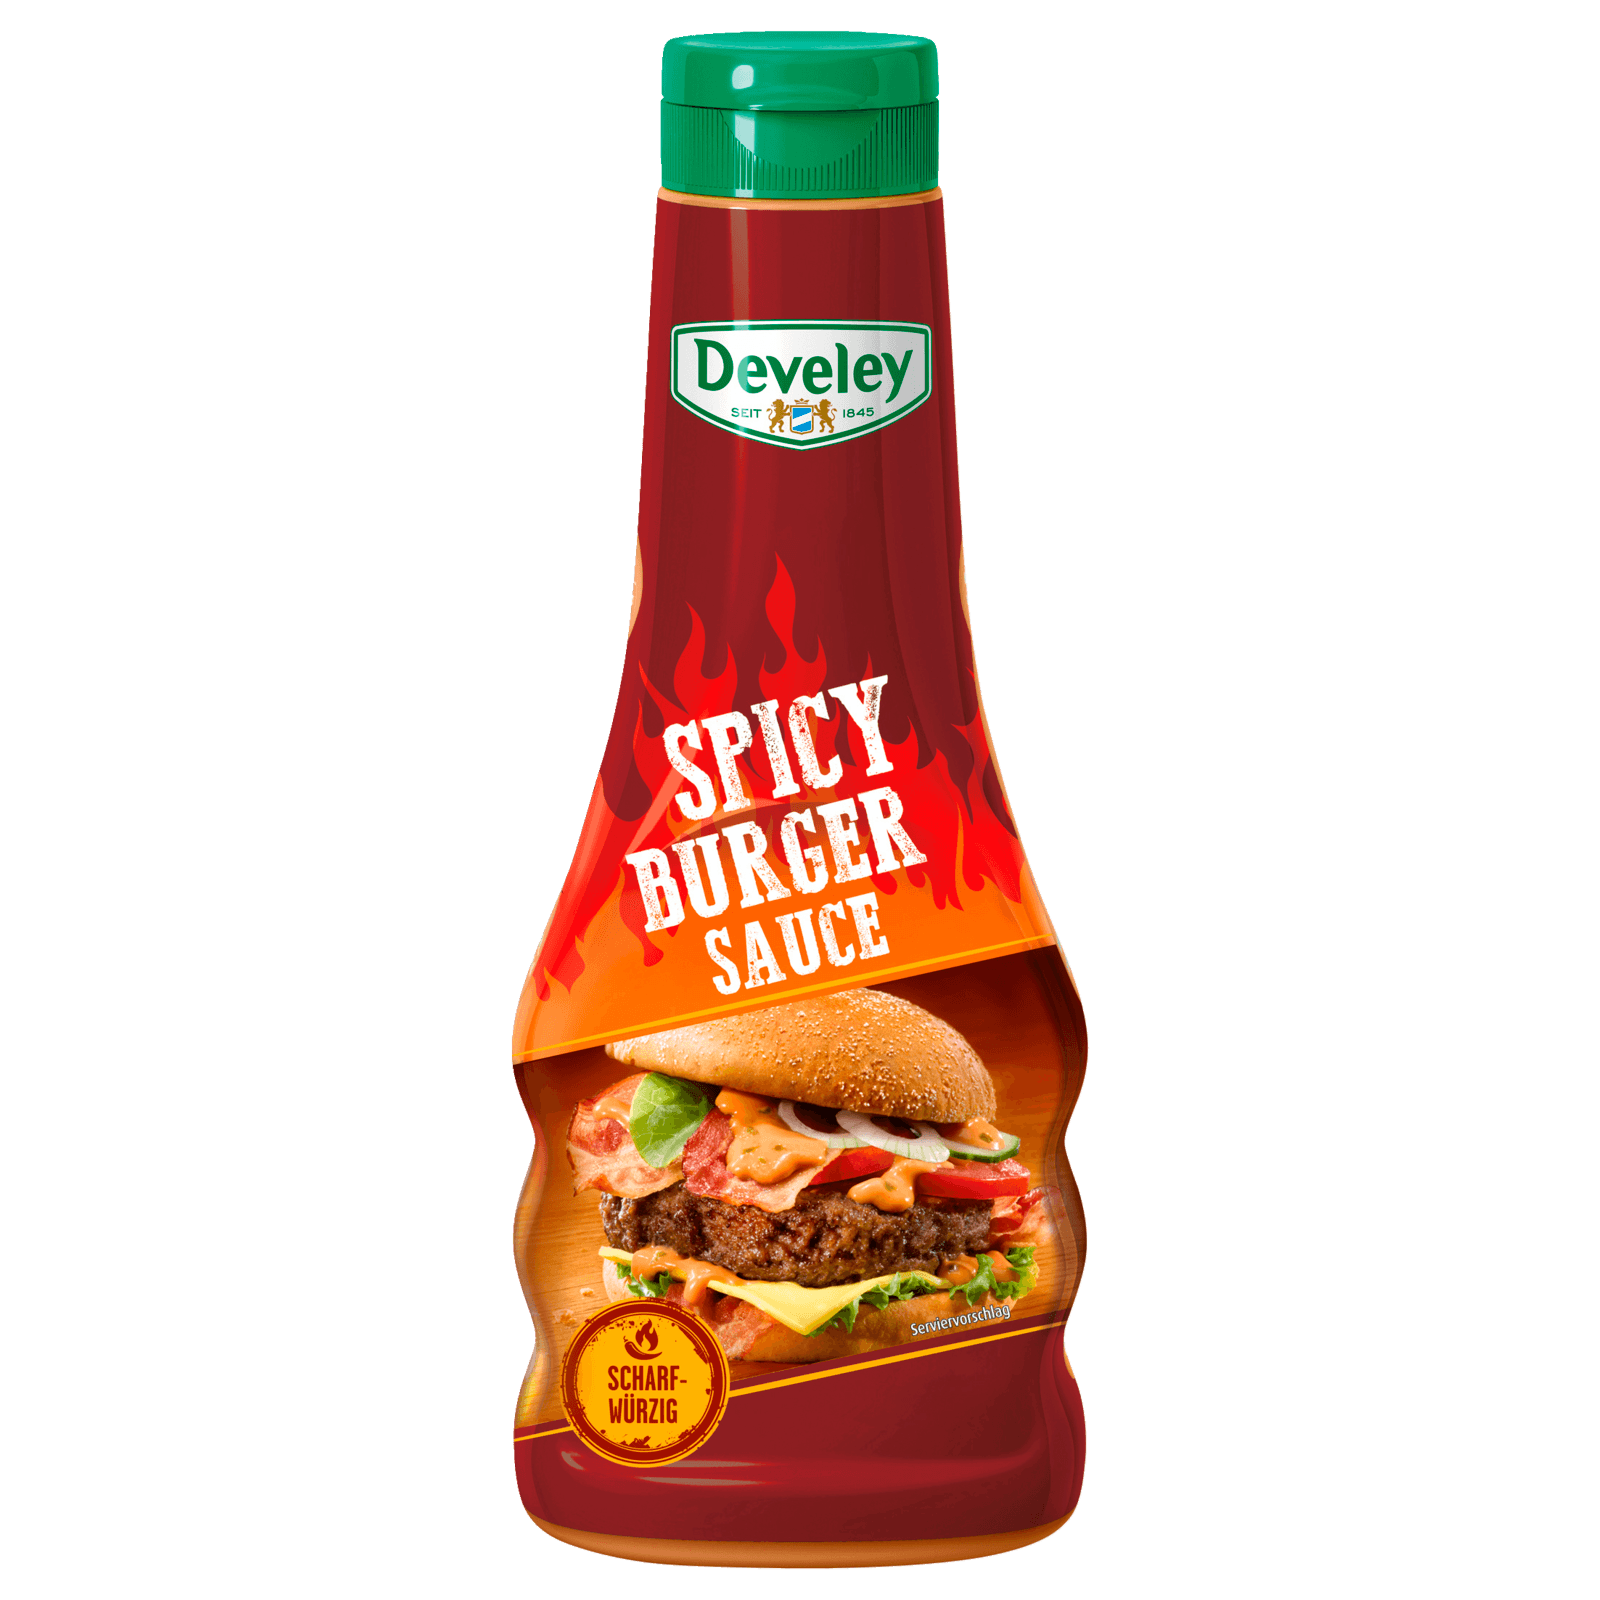 Develey Spicy Burger Sauce 250ml bei REWE online bestellen!